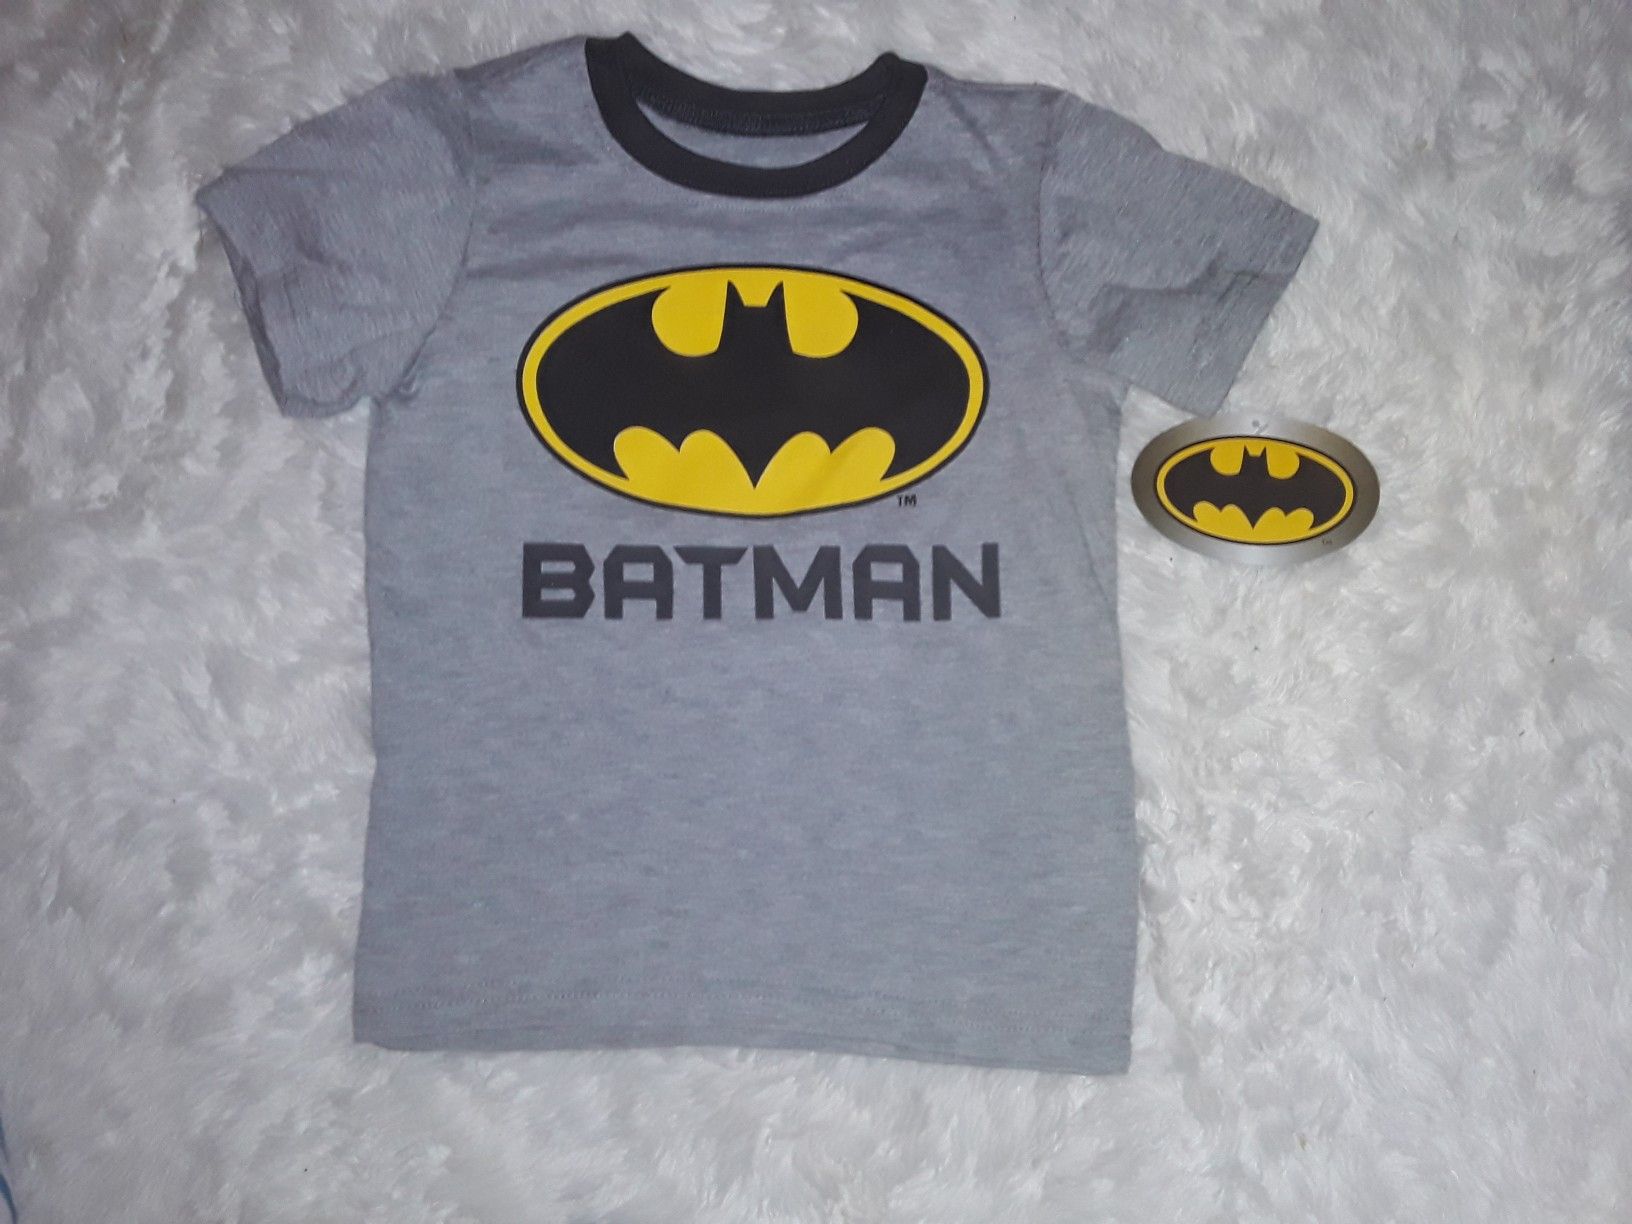 Batman boys shirt